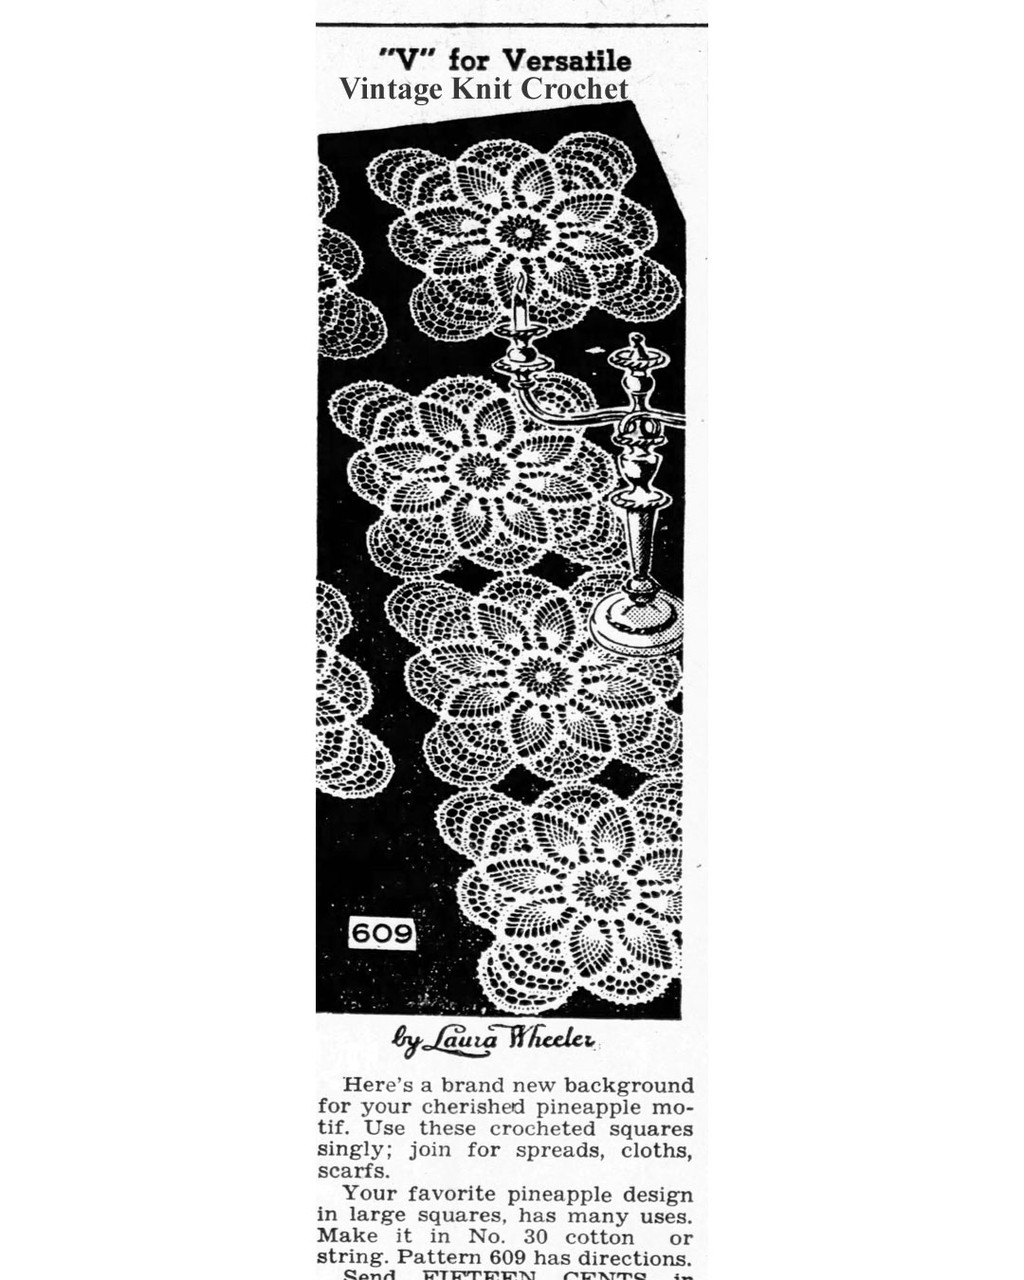 Mail Order Design 609, Crochet Pineapple Square Newspaper Advertisement 